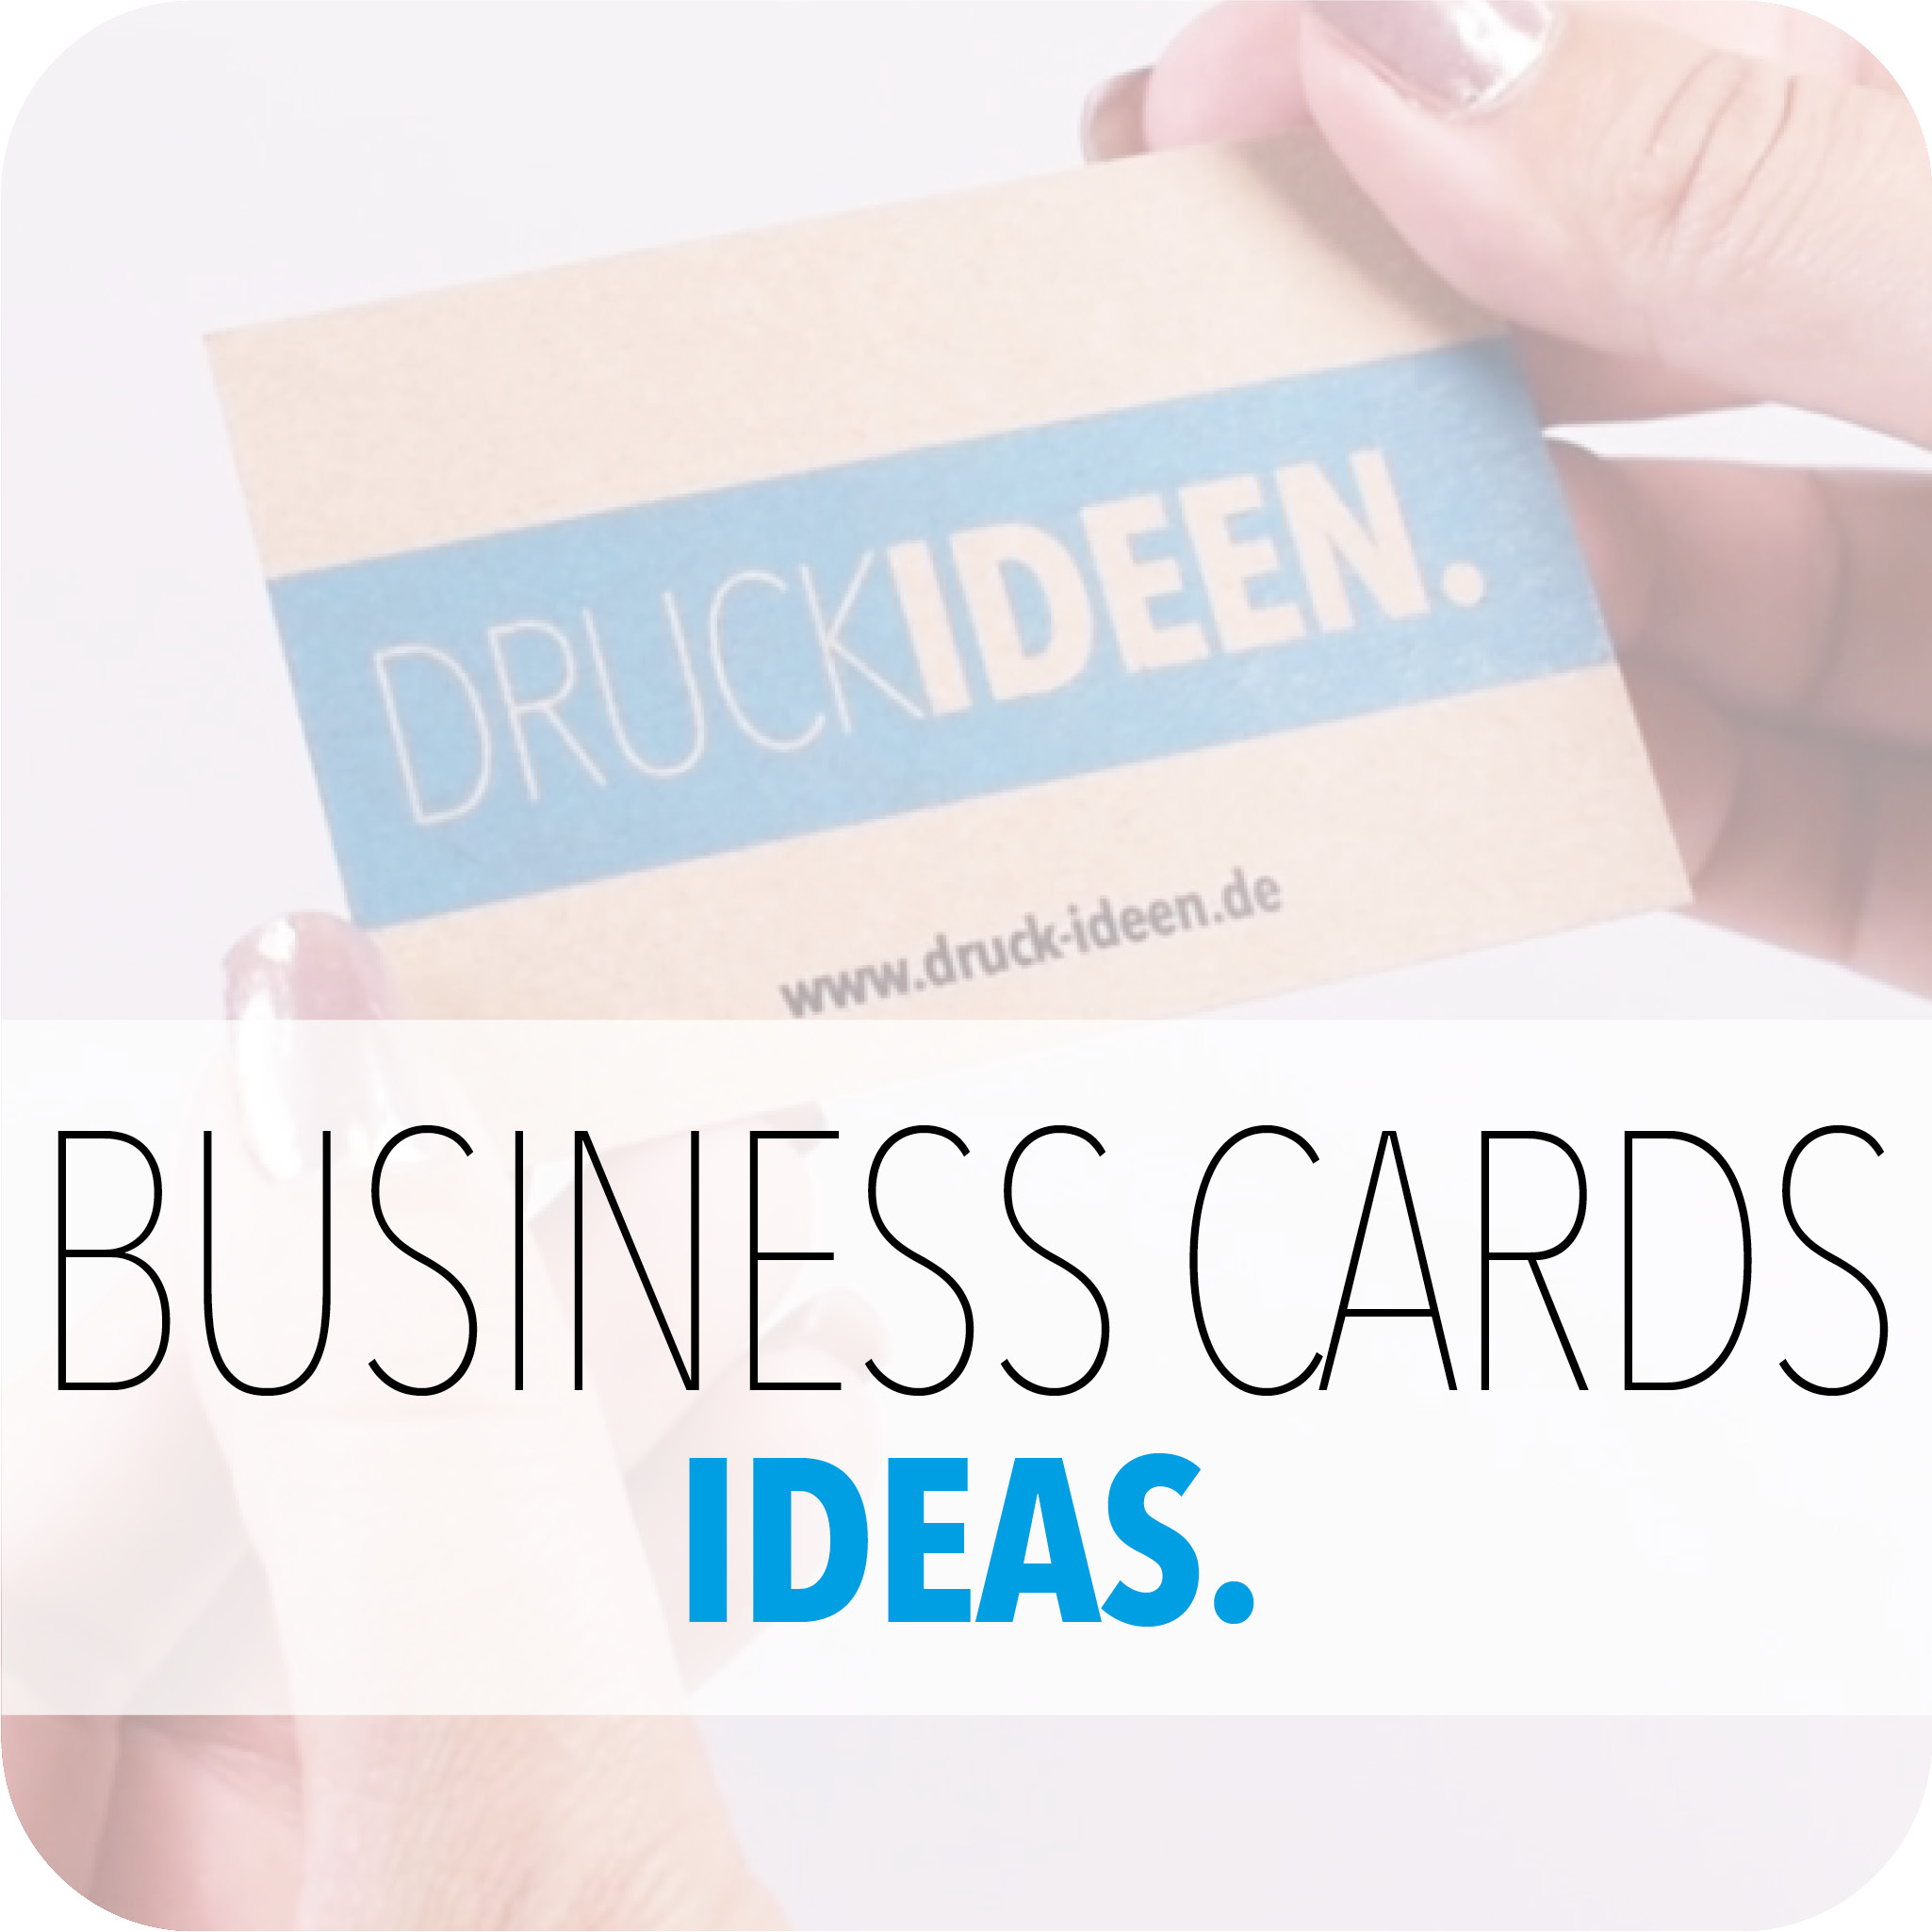 BUSINESS CARDS IDEAS